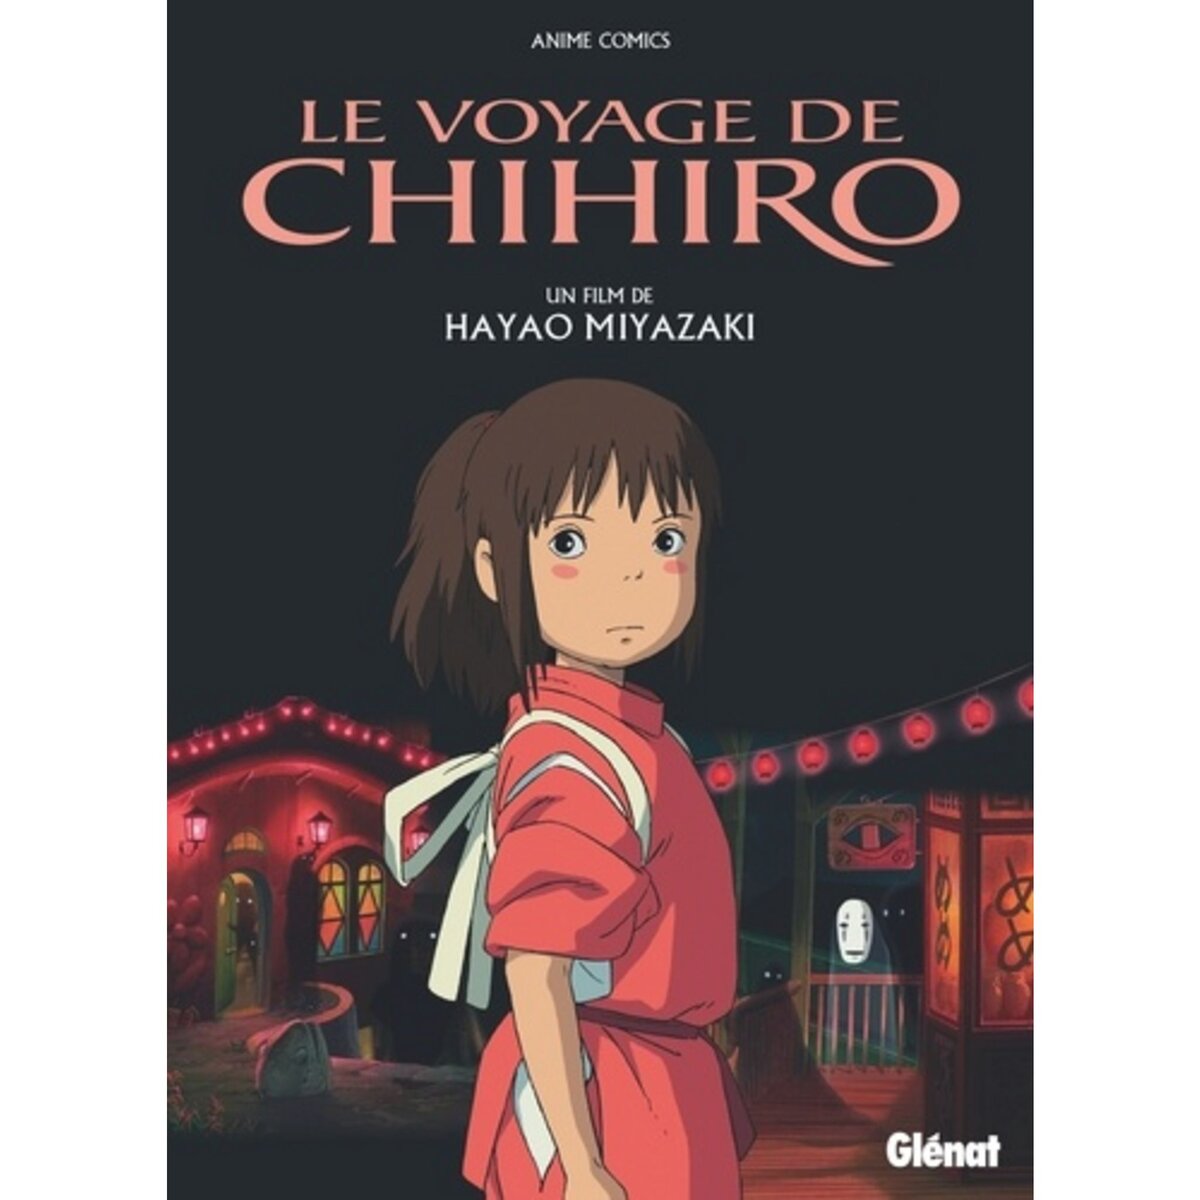  LE VOYAGE DE CHIHIRO, Miyazaki Hayao